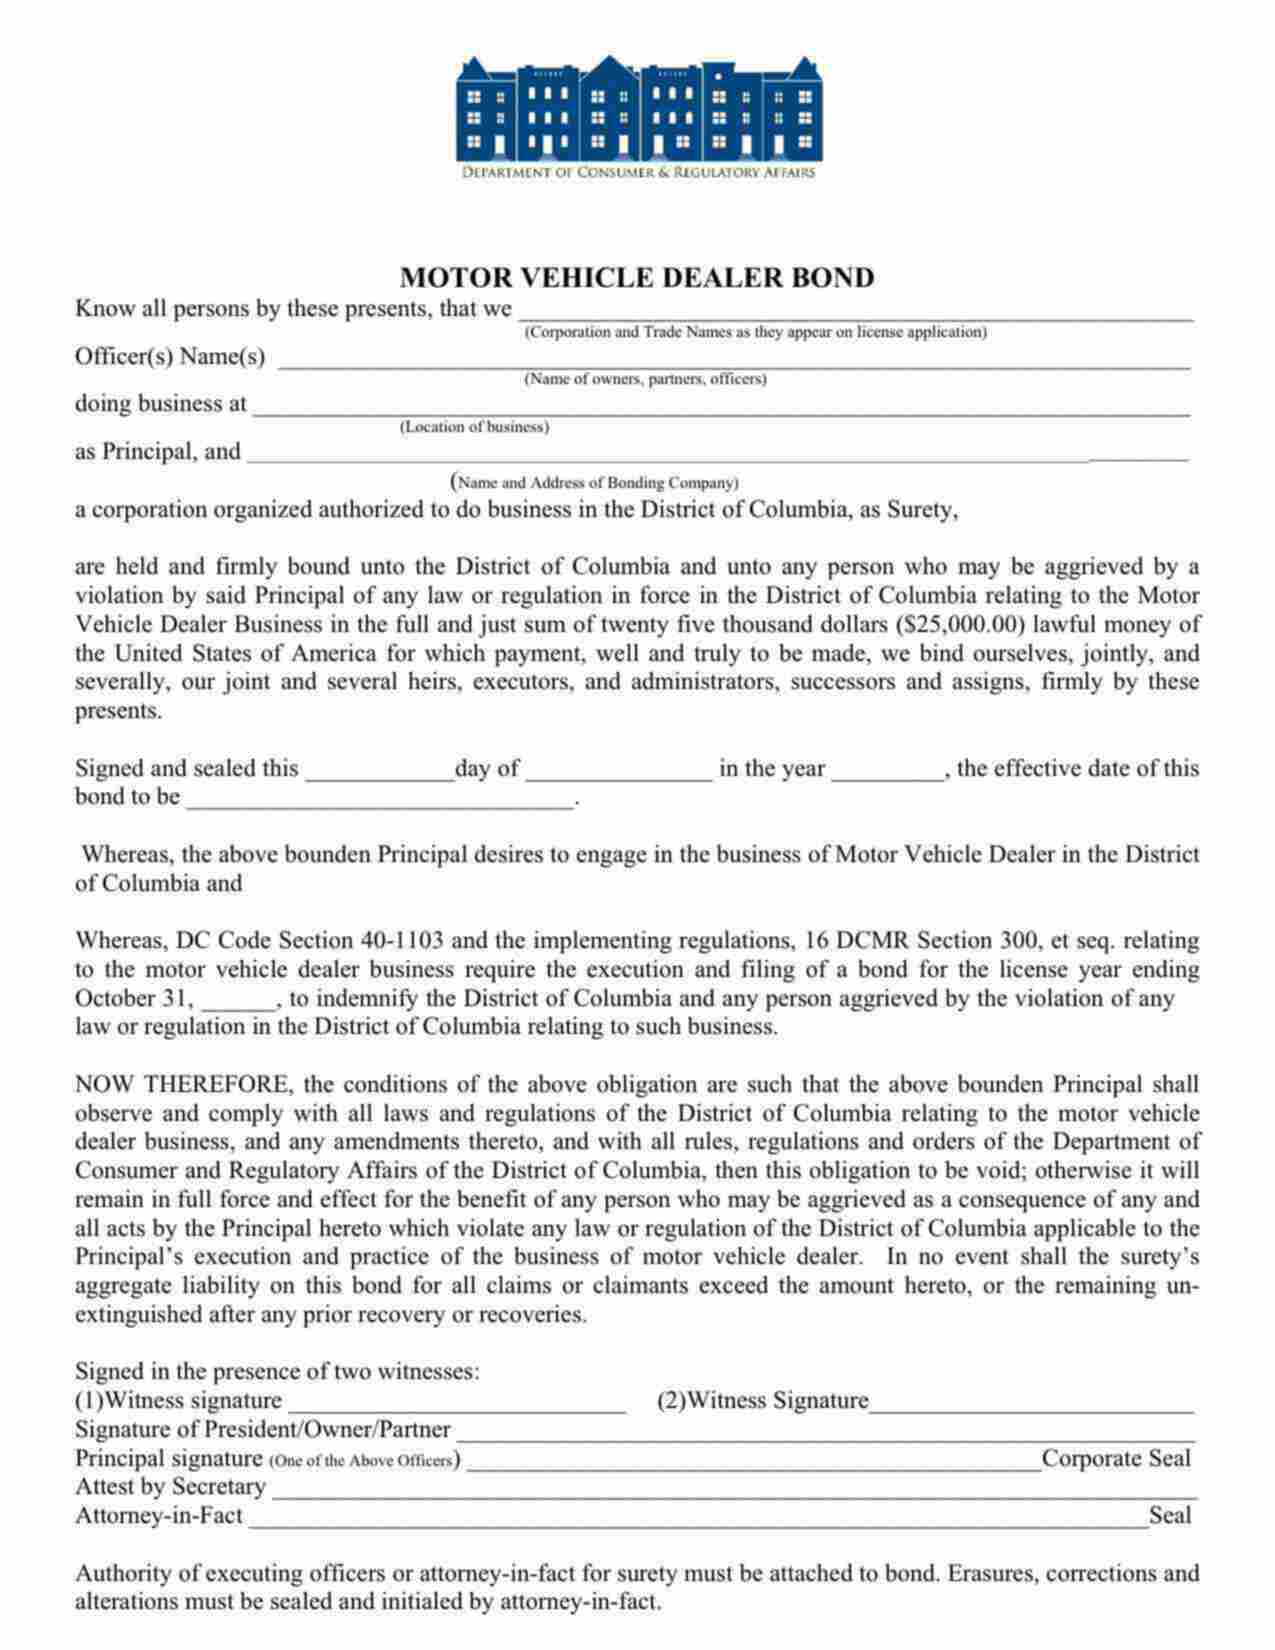 District of Columbia Motor Vehicle Dealer Bond Form